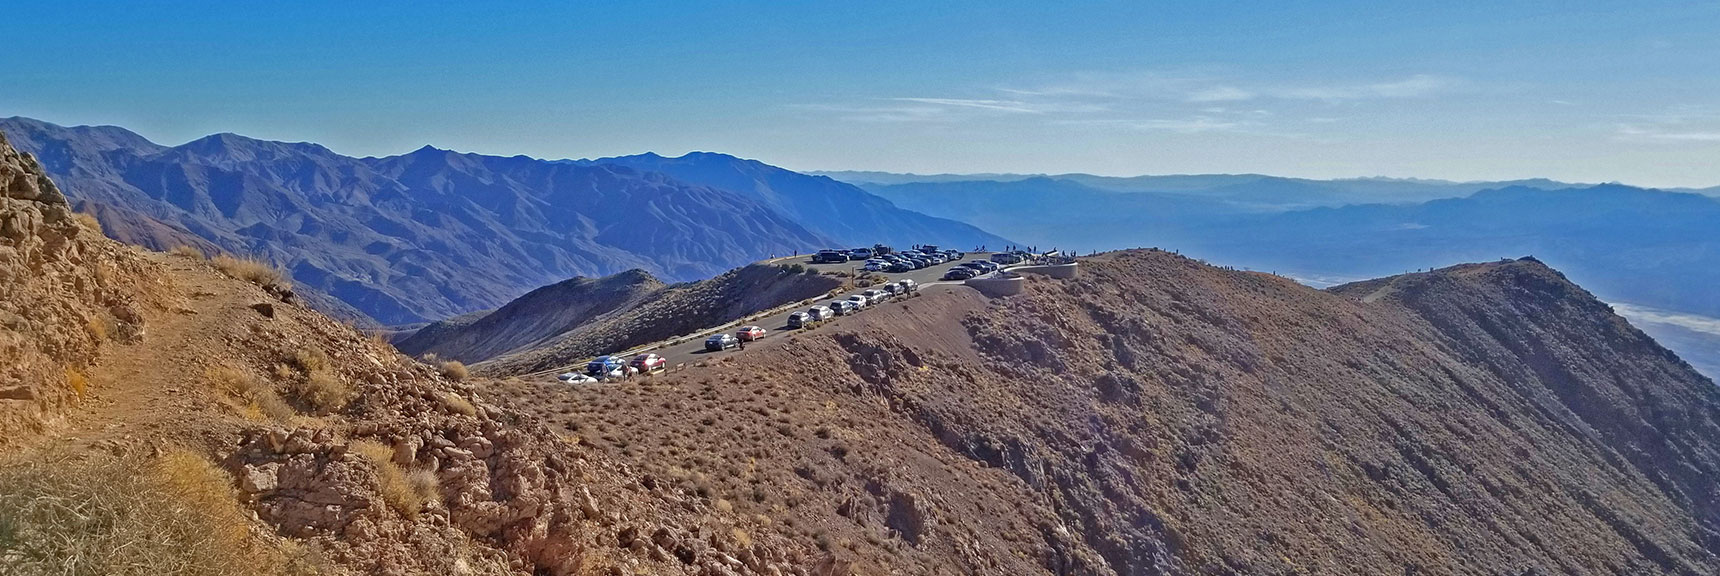 Descending Dante's Ridge, Dante's View in Sight Below | Dante's View to Mt. Perry | Death Valley National Park, CA